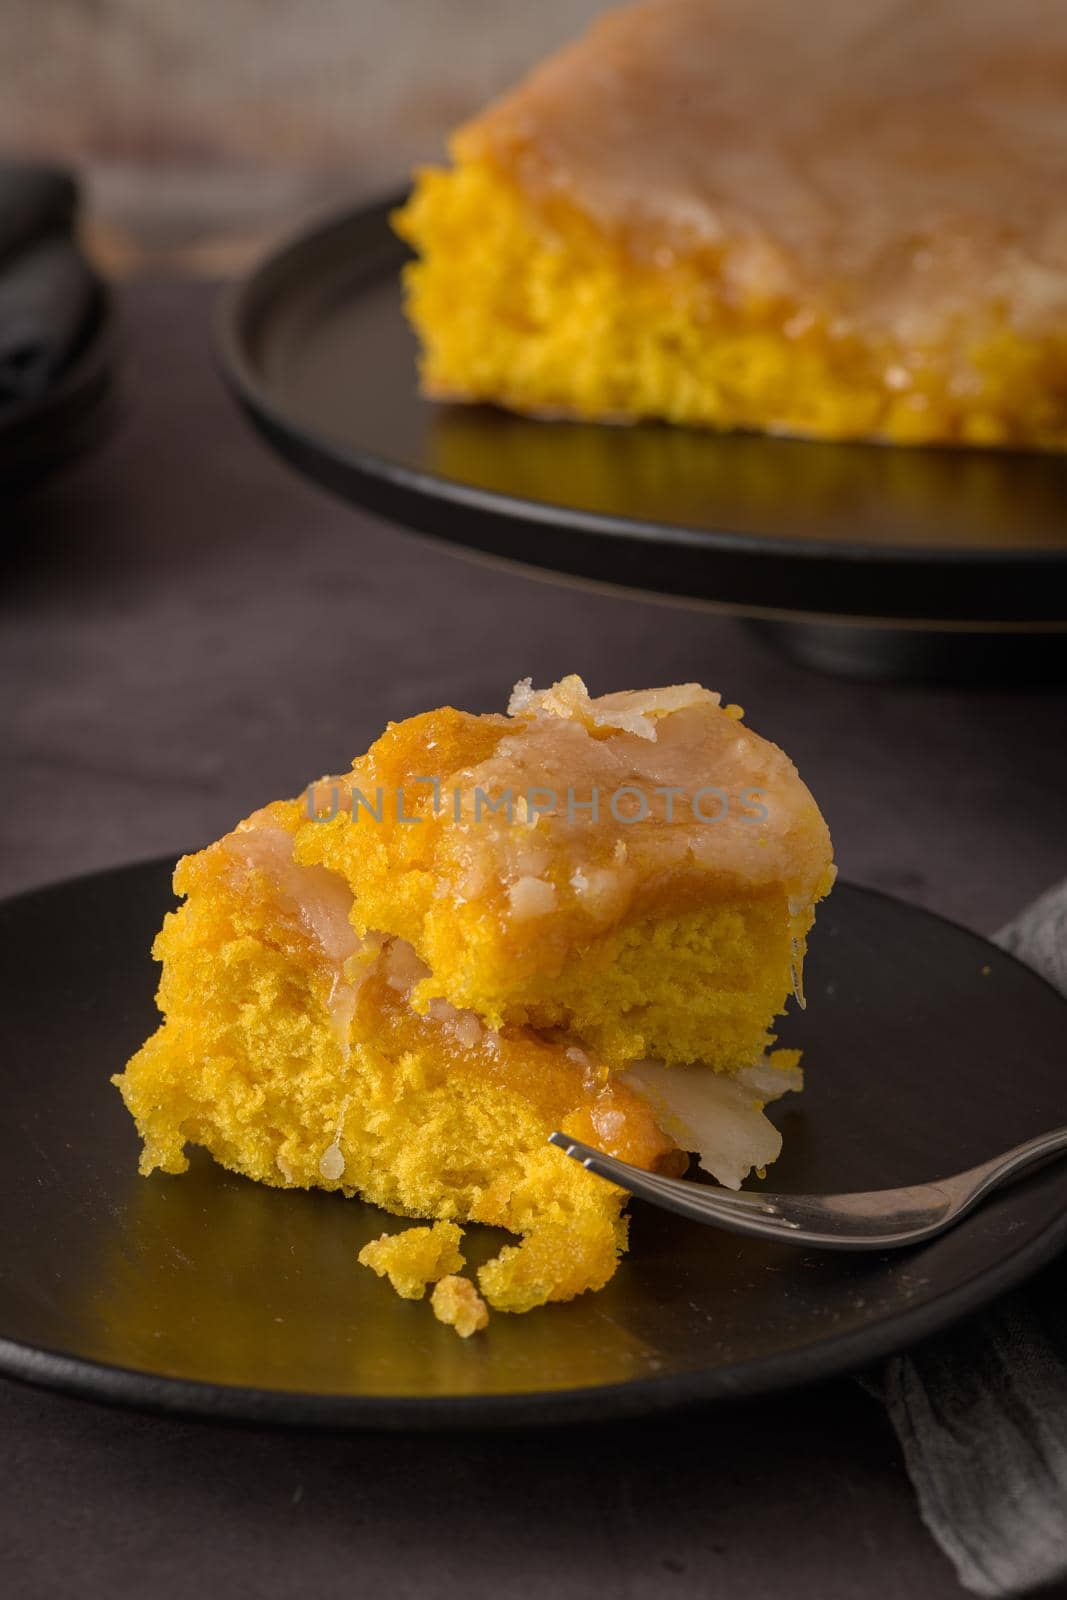 Portuguese sponge cake bolinhol from Vizela, served on a plate. On kitchen countertop.